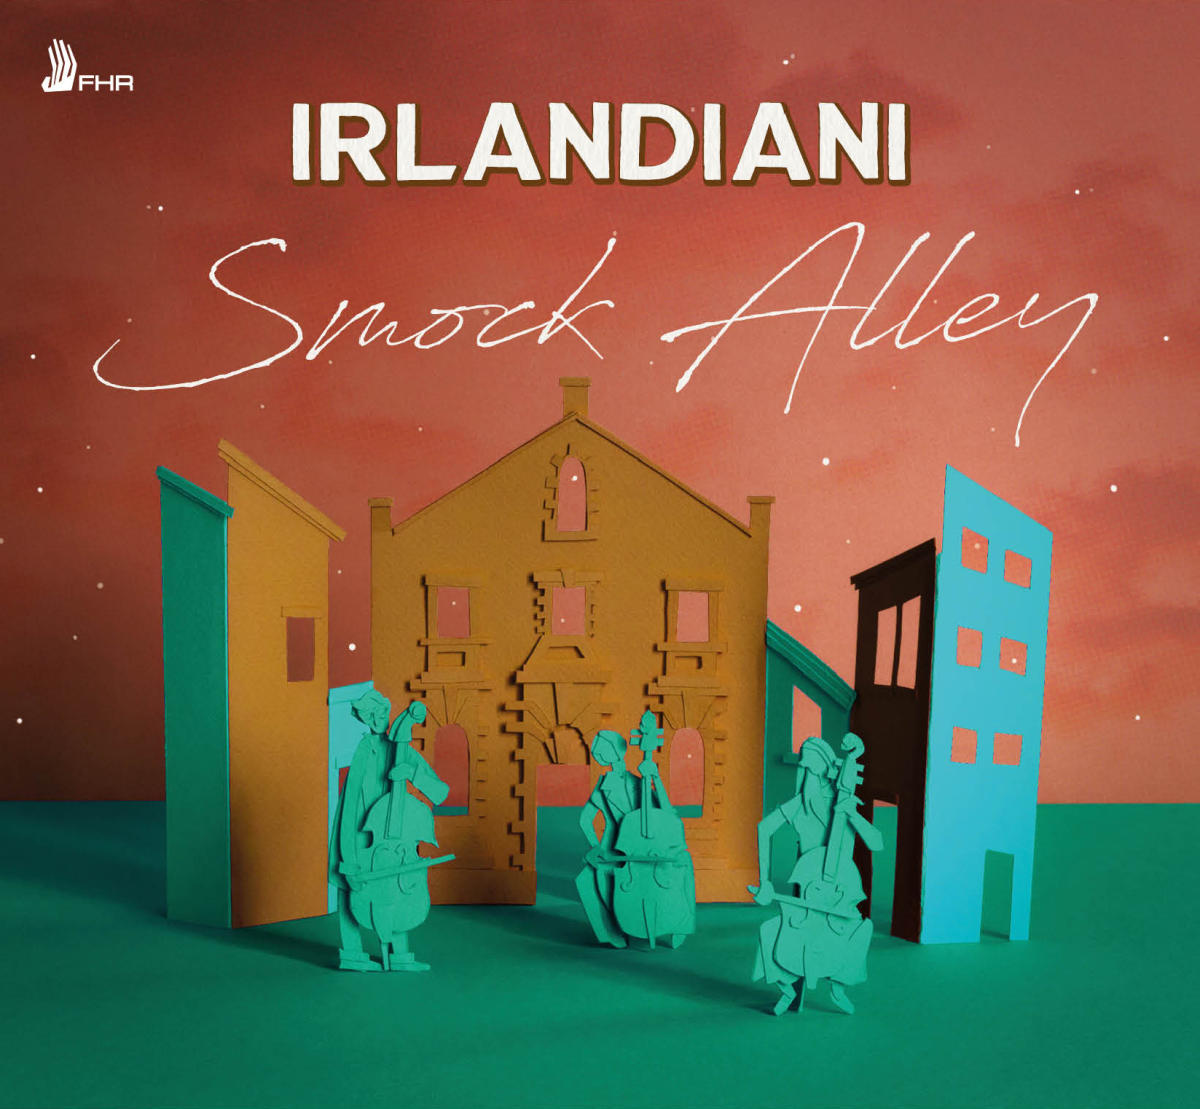 Irlandiani - Smock Alley - Irlandiani's new album explores 18th-century Italian-Irish musical connections